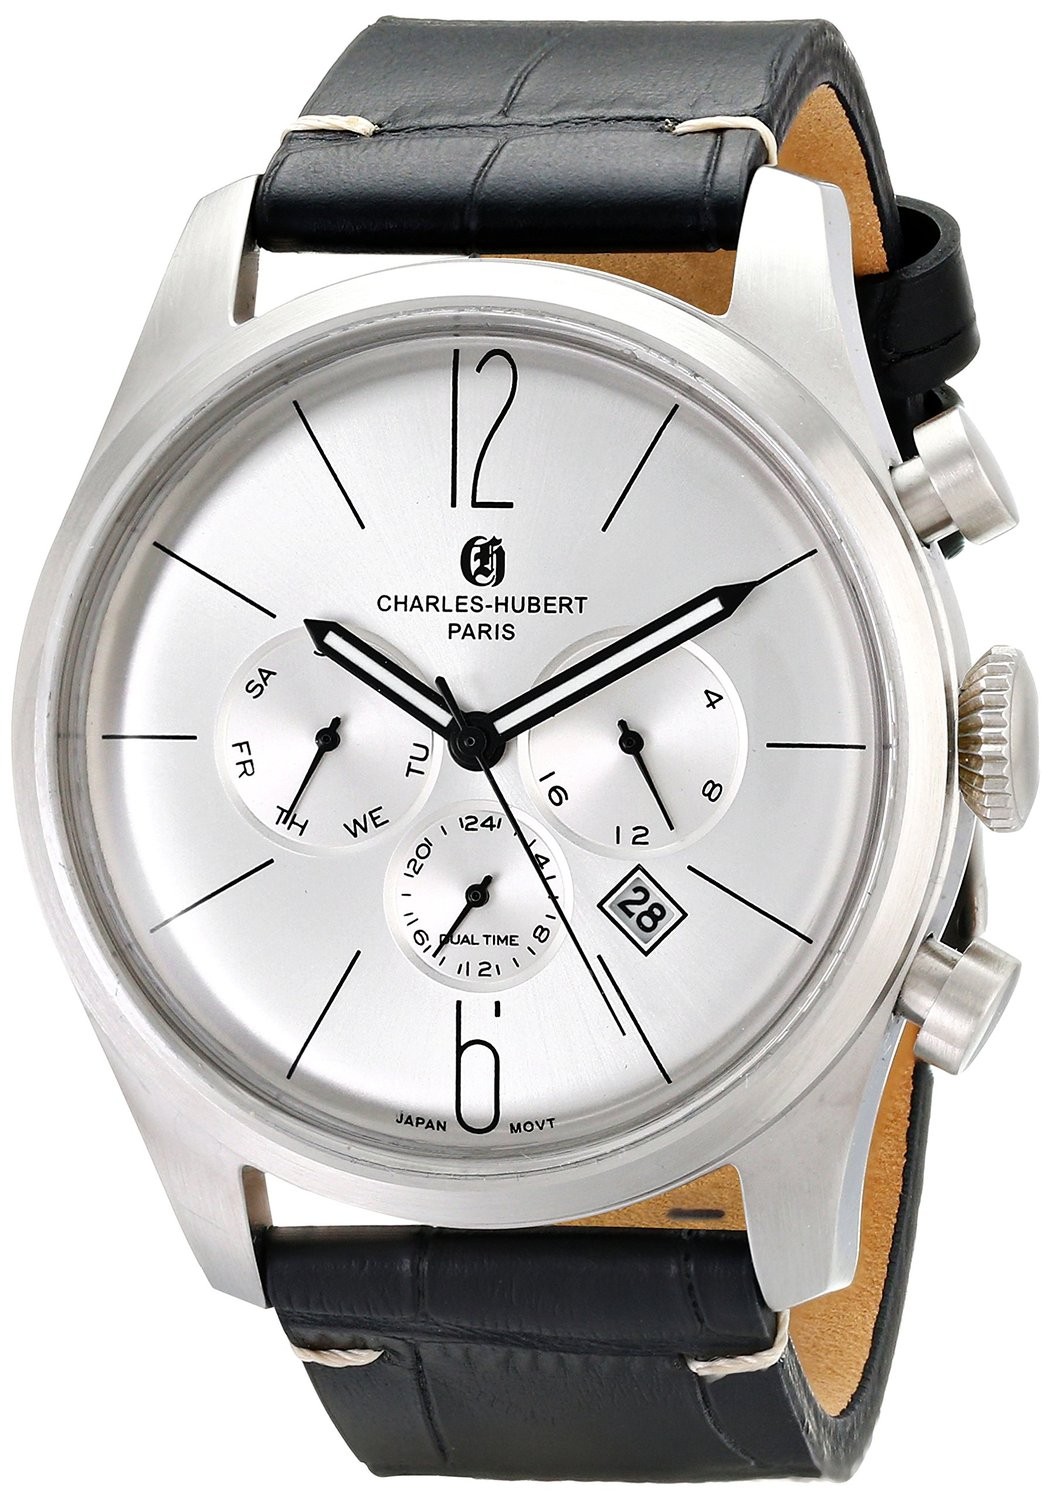 Charles-Hubert Paris Men's Stainless Steel Dual Time Quartz Watch